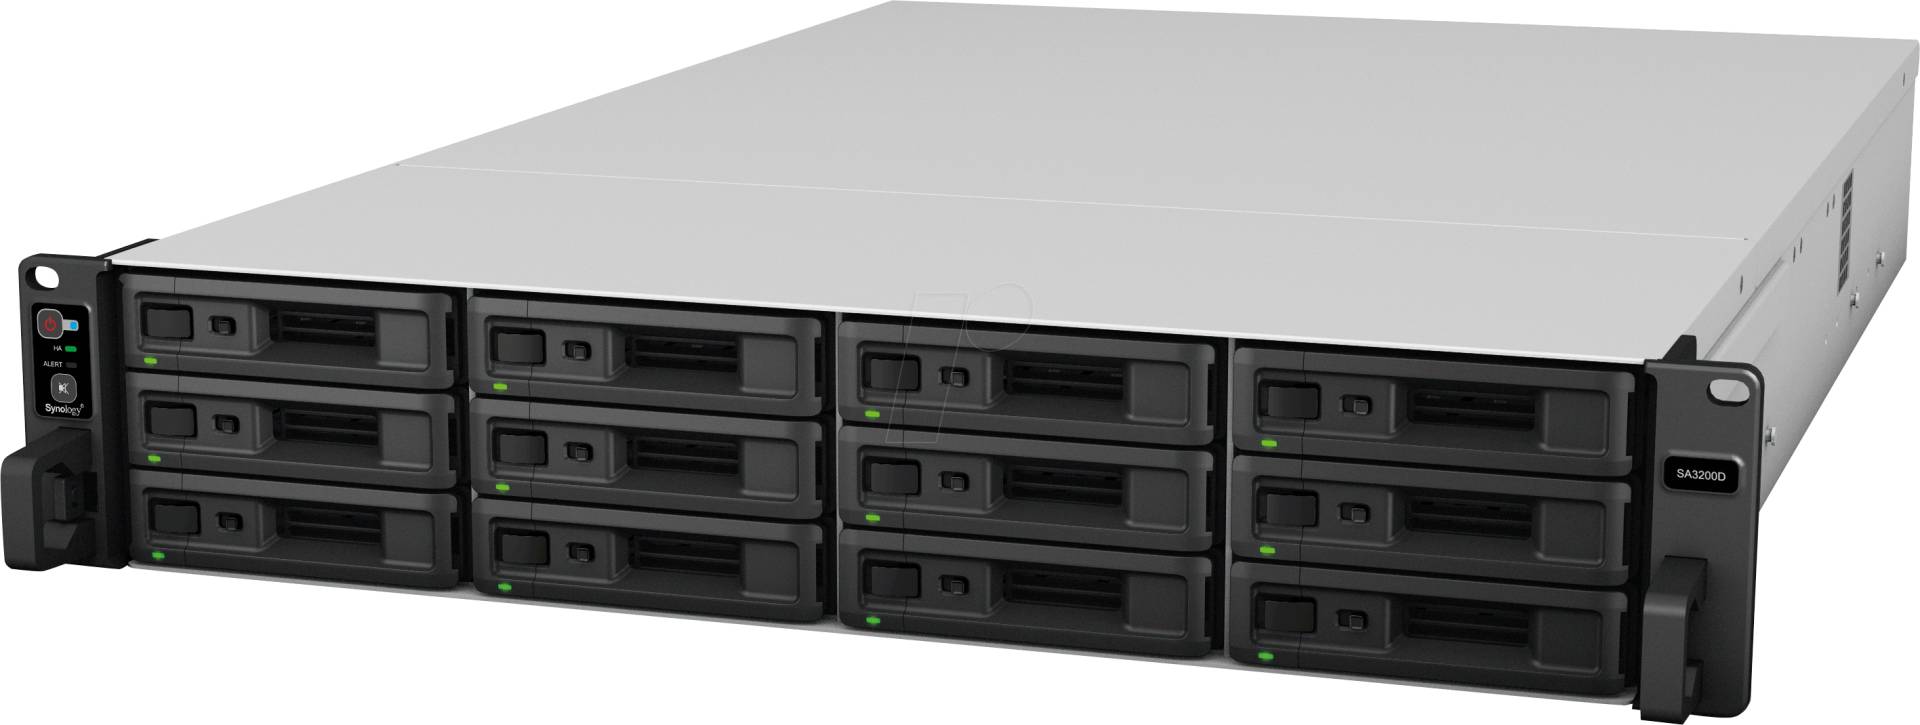 SYNOLOGY SA3200D - NAS-Server DiskStation SA3200D Leergehäuse von Synology